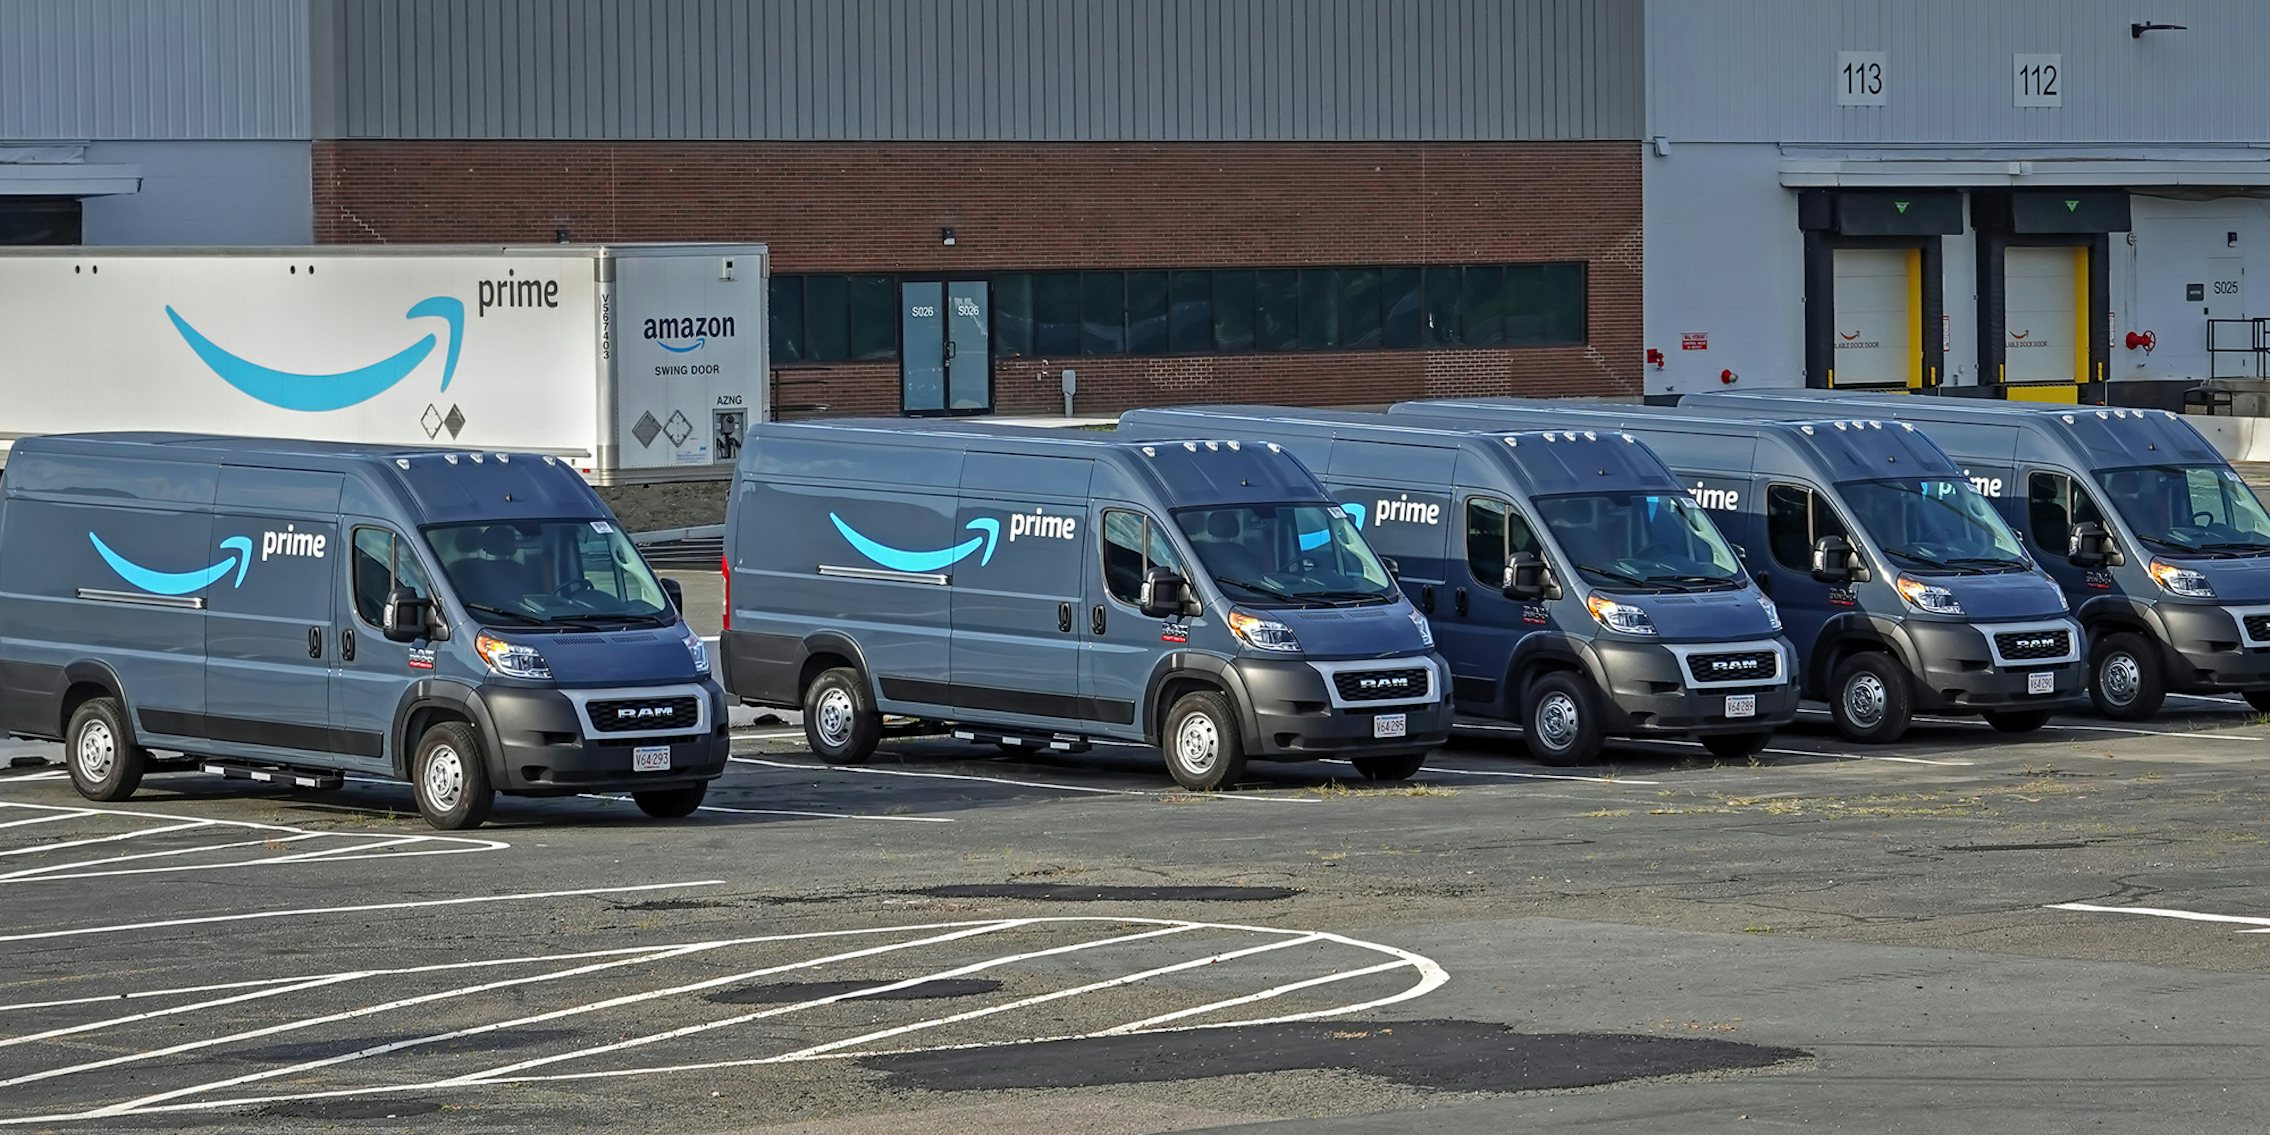 Amazon vans and truck in parking lot